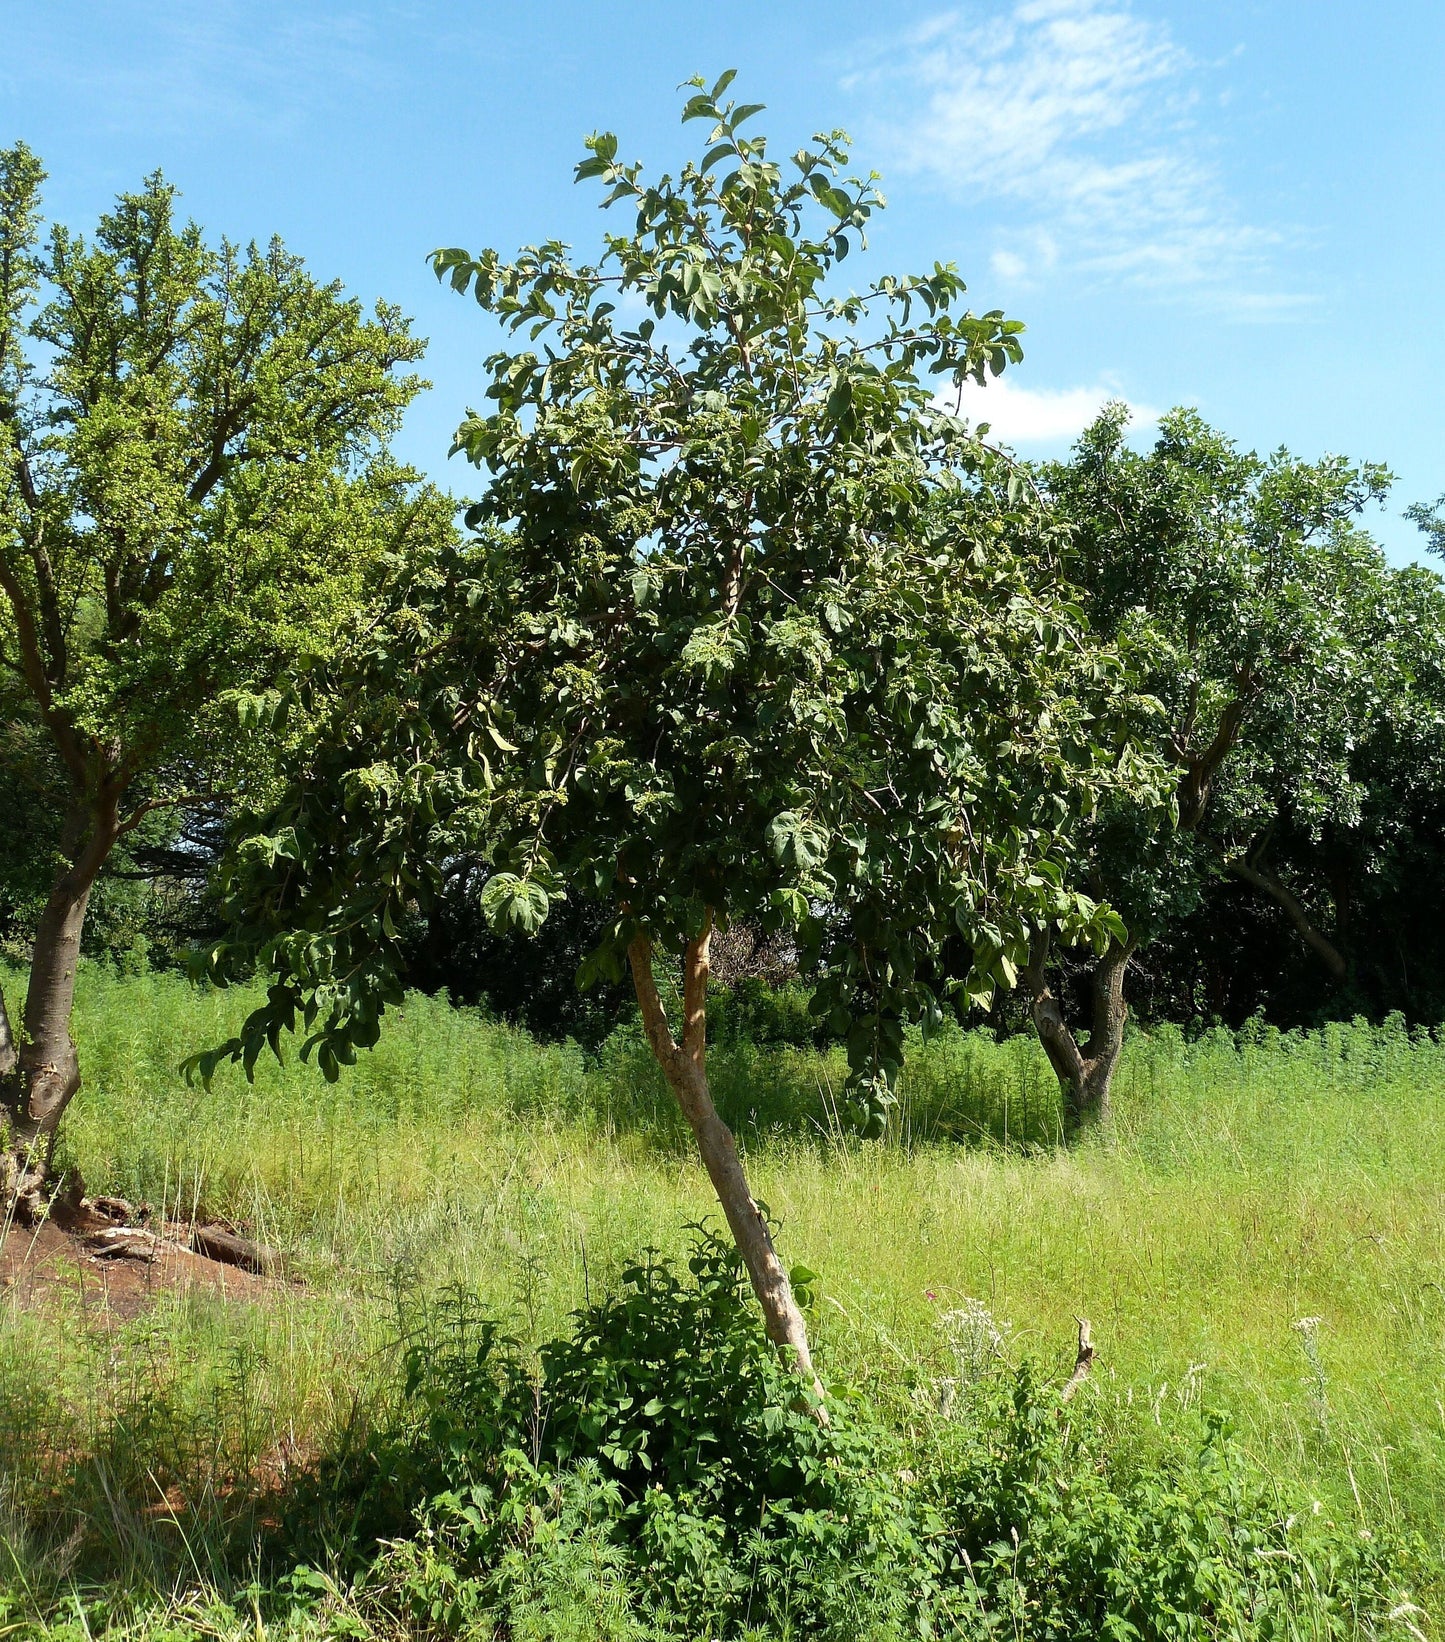 Vangueria Infausta * Nespolo selvatico africano * Sapore di mela tropicale * 5 semi rari *